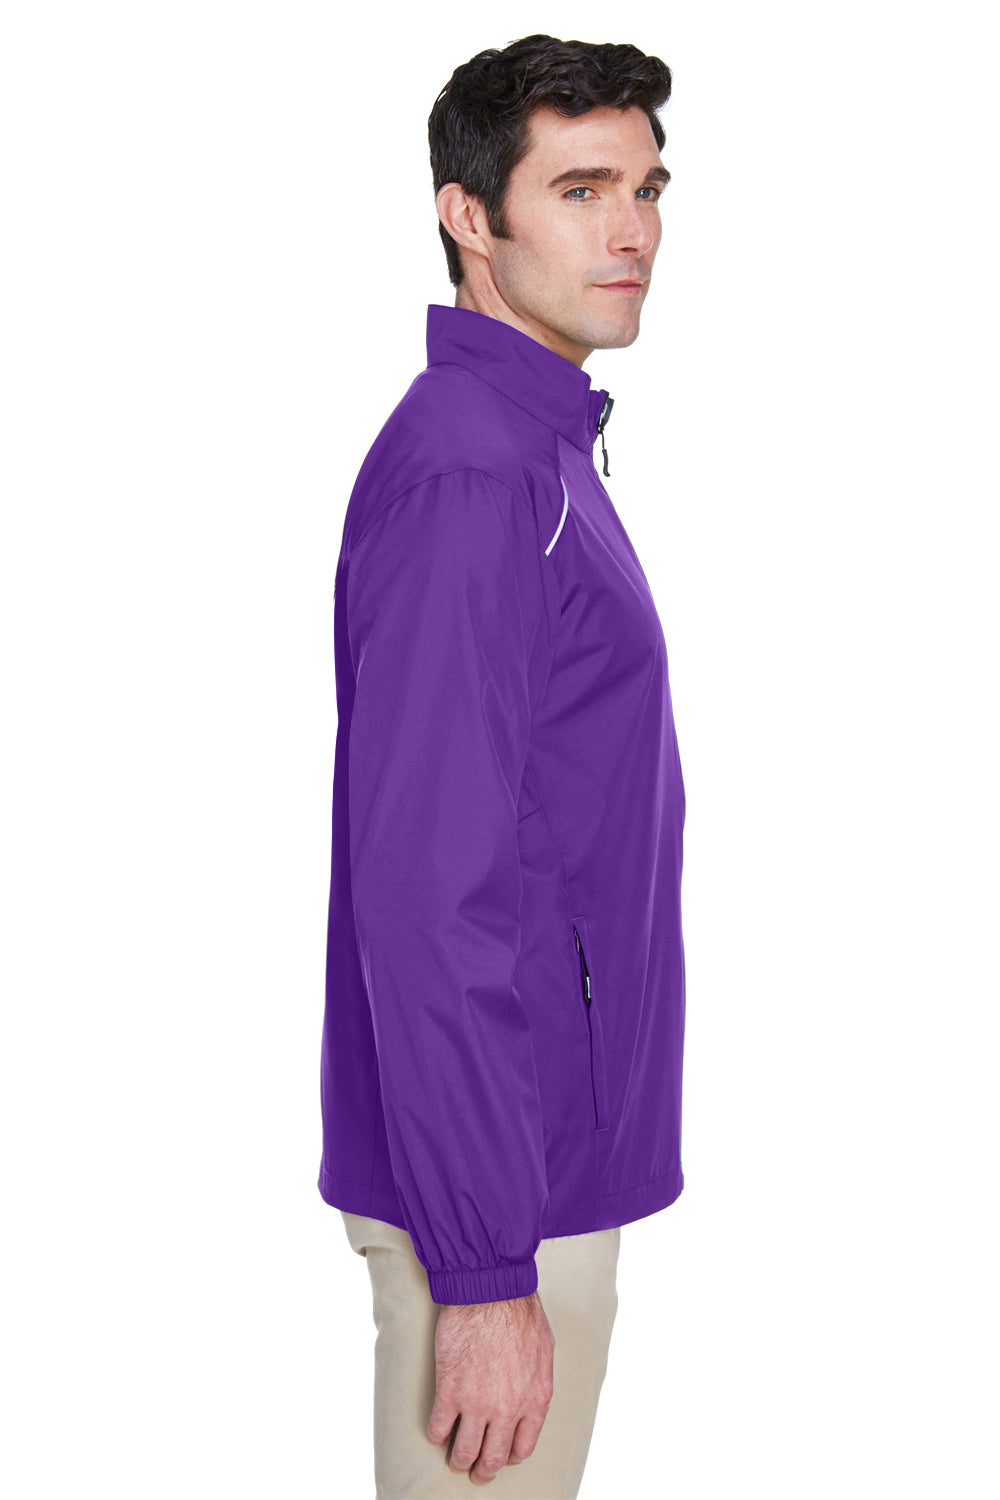 Core 365 88183 Mens Motivate Water Resistant Full Zip Jacket Purple Side